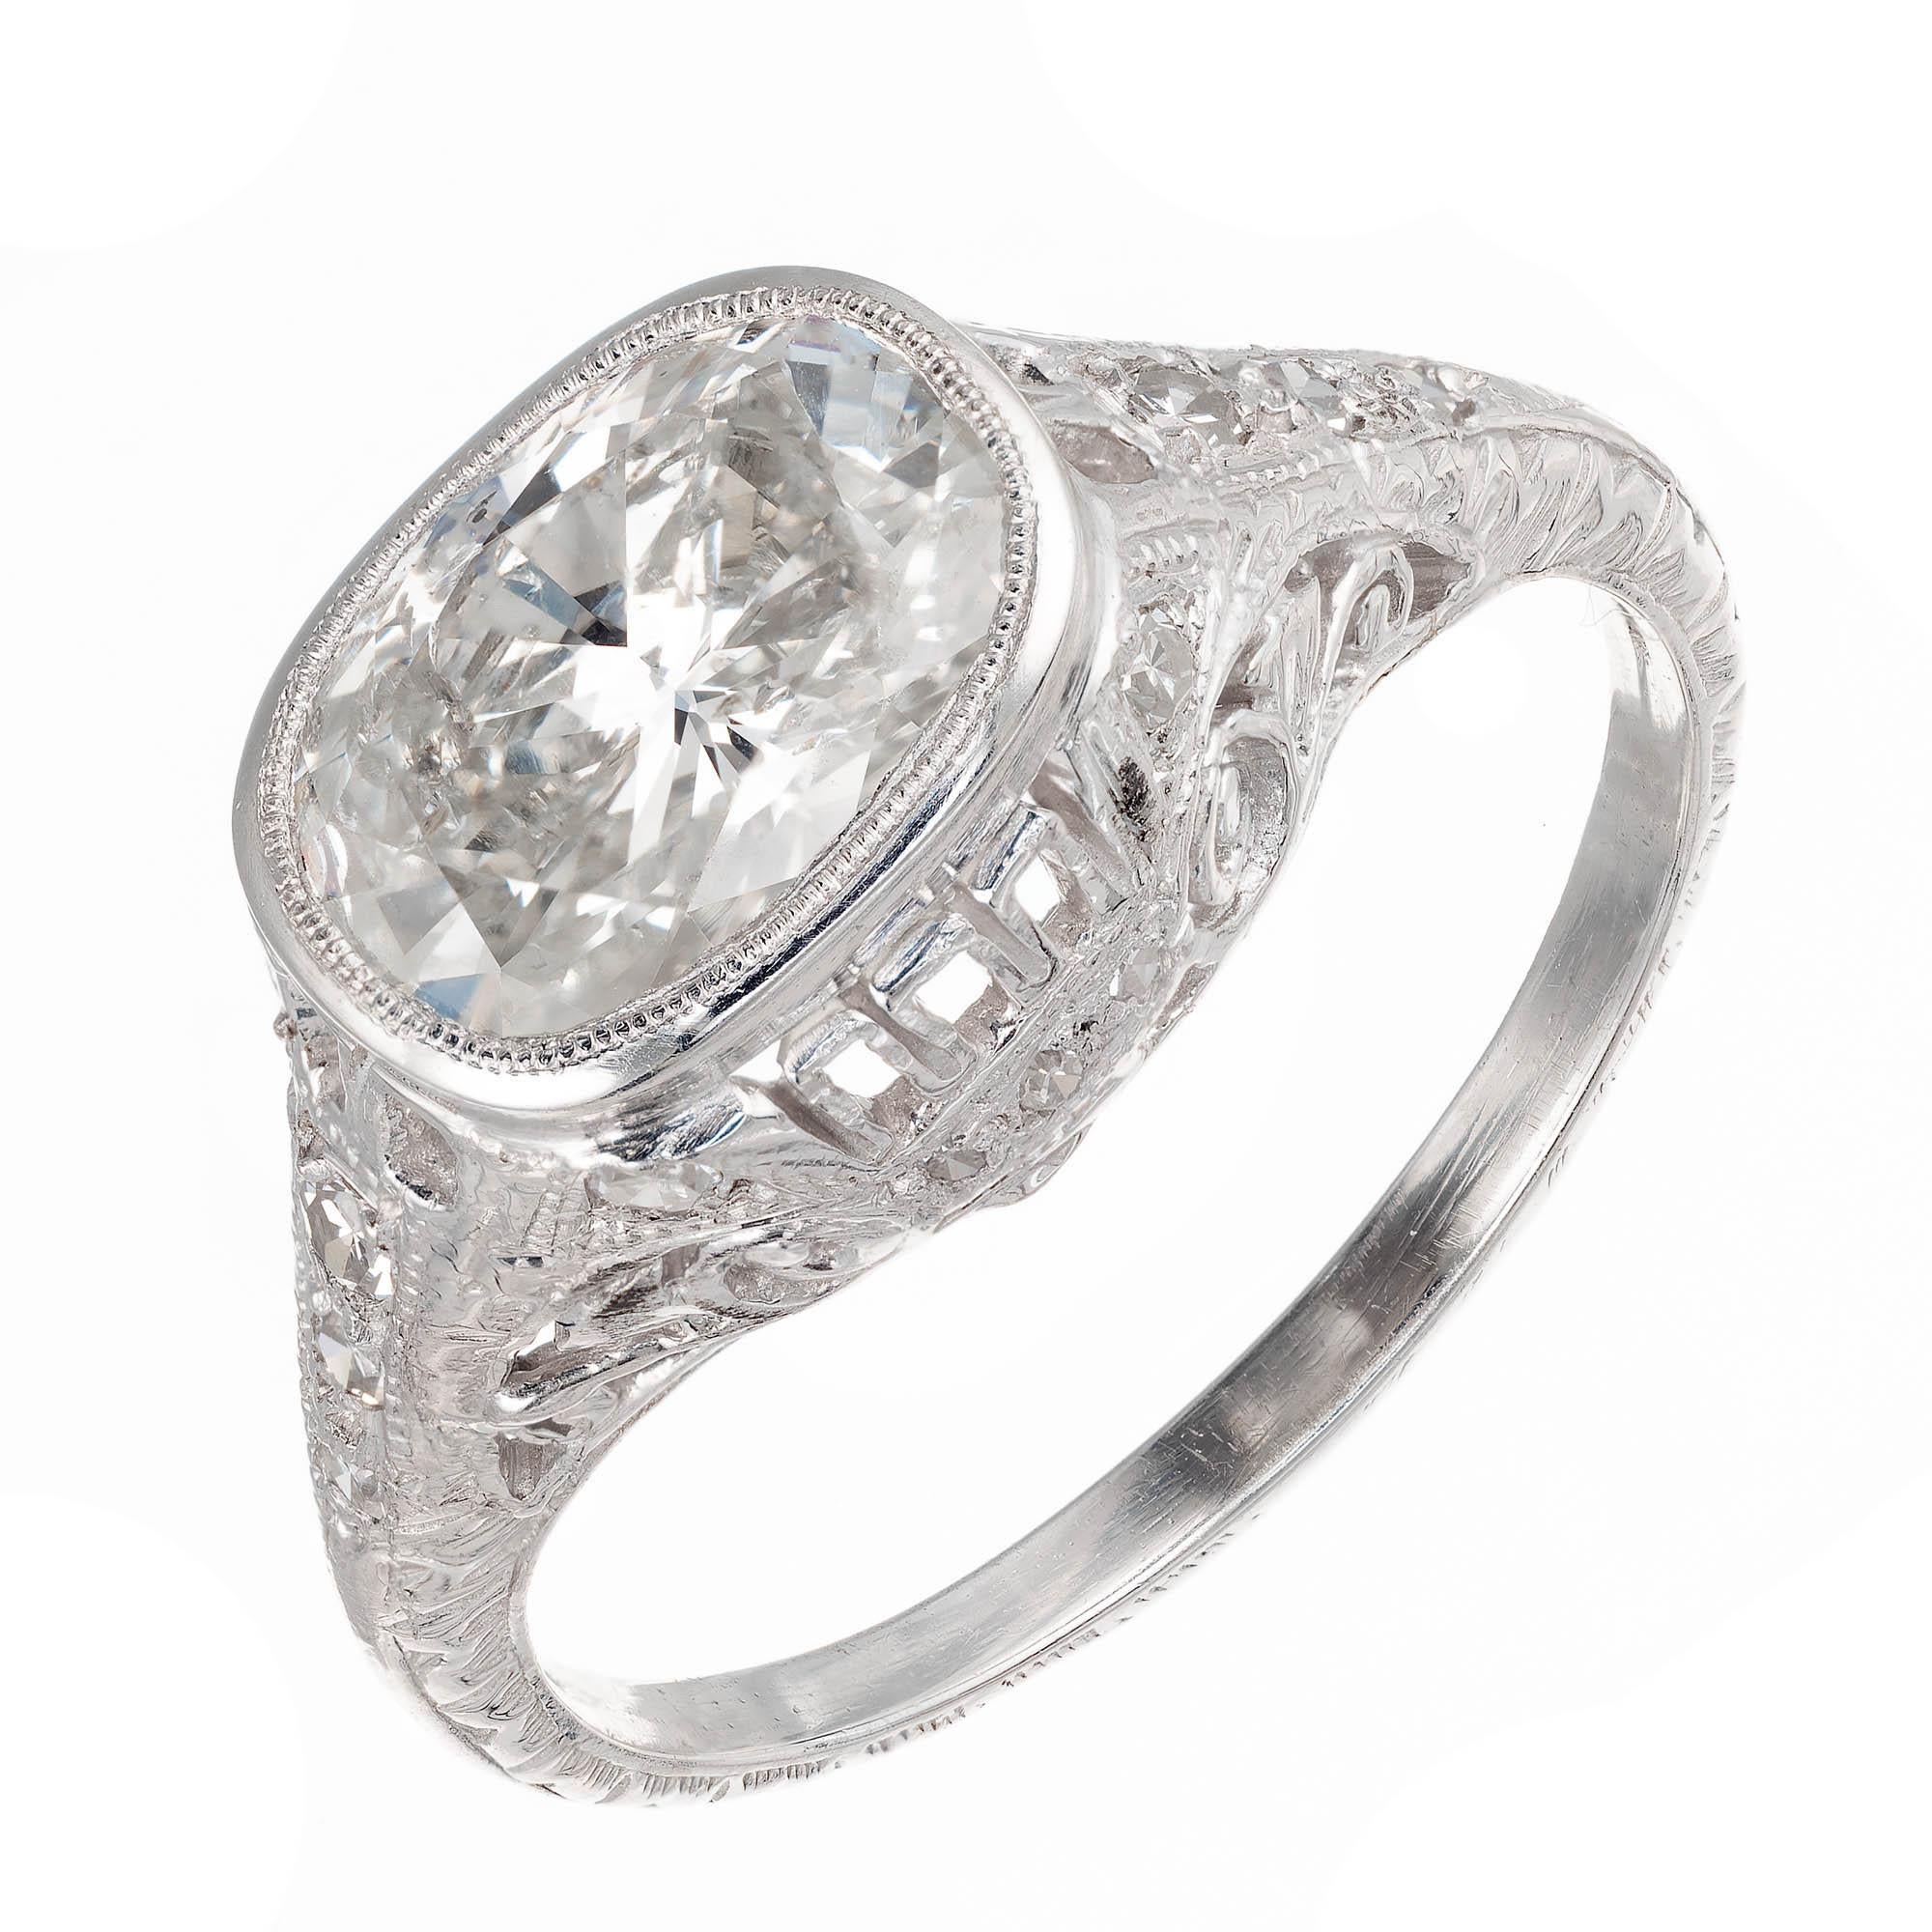 1930’s Diamond platinum filigree engagement ring. Original cushion cut 1.50 carat diamond in a platinum setting with round accent diamonds.

1 cushion oval brilliant cut I-J I diamond, Approximate 1.52 carat. EGL certificate # US4001163291D
16